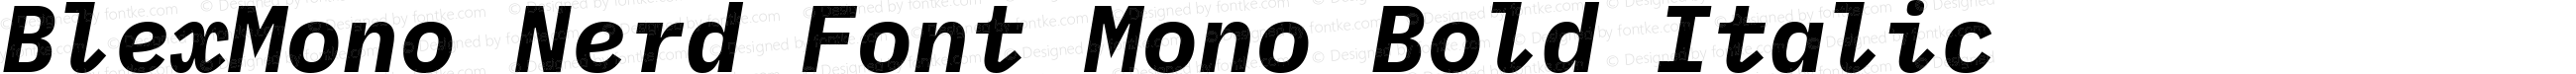 Blex Mono Bold Italic Nerd Font Complete Mono